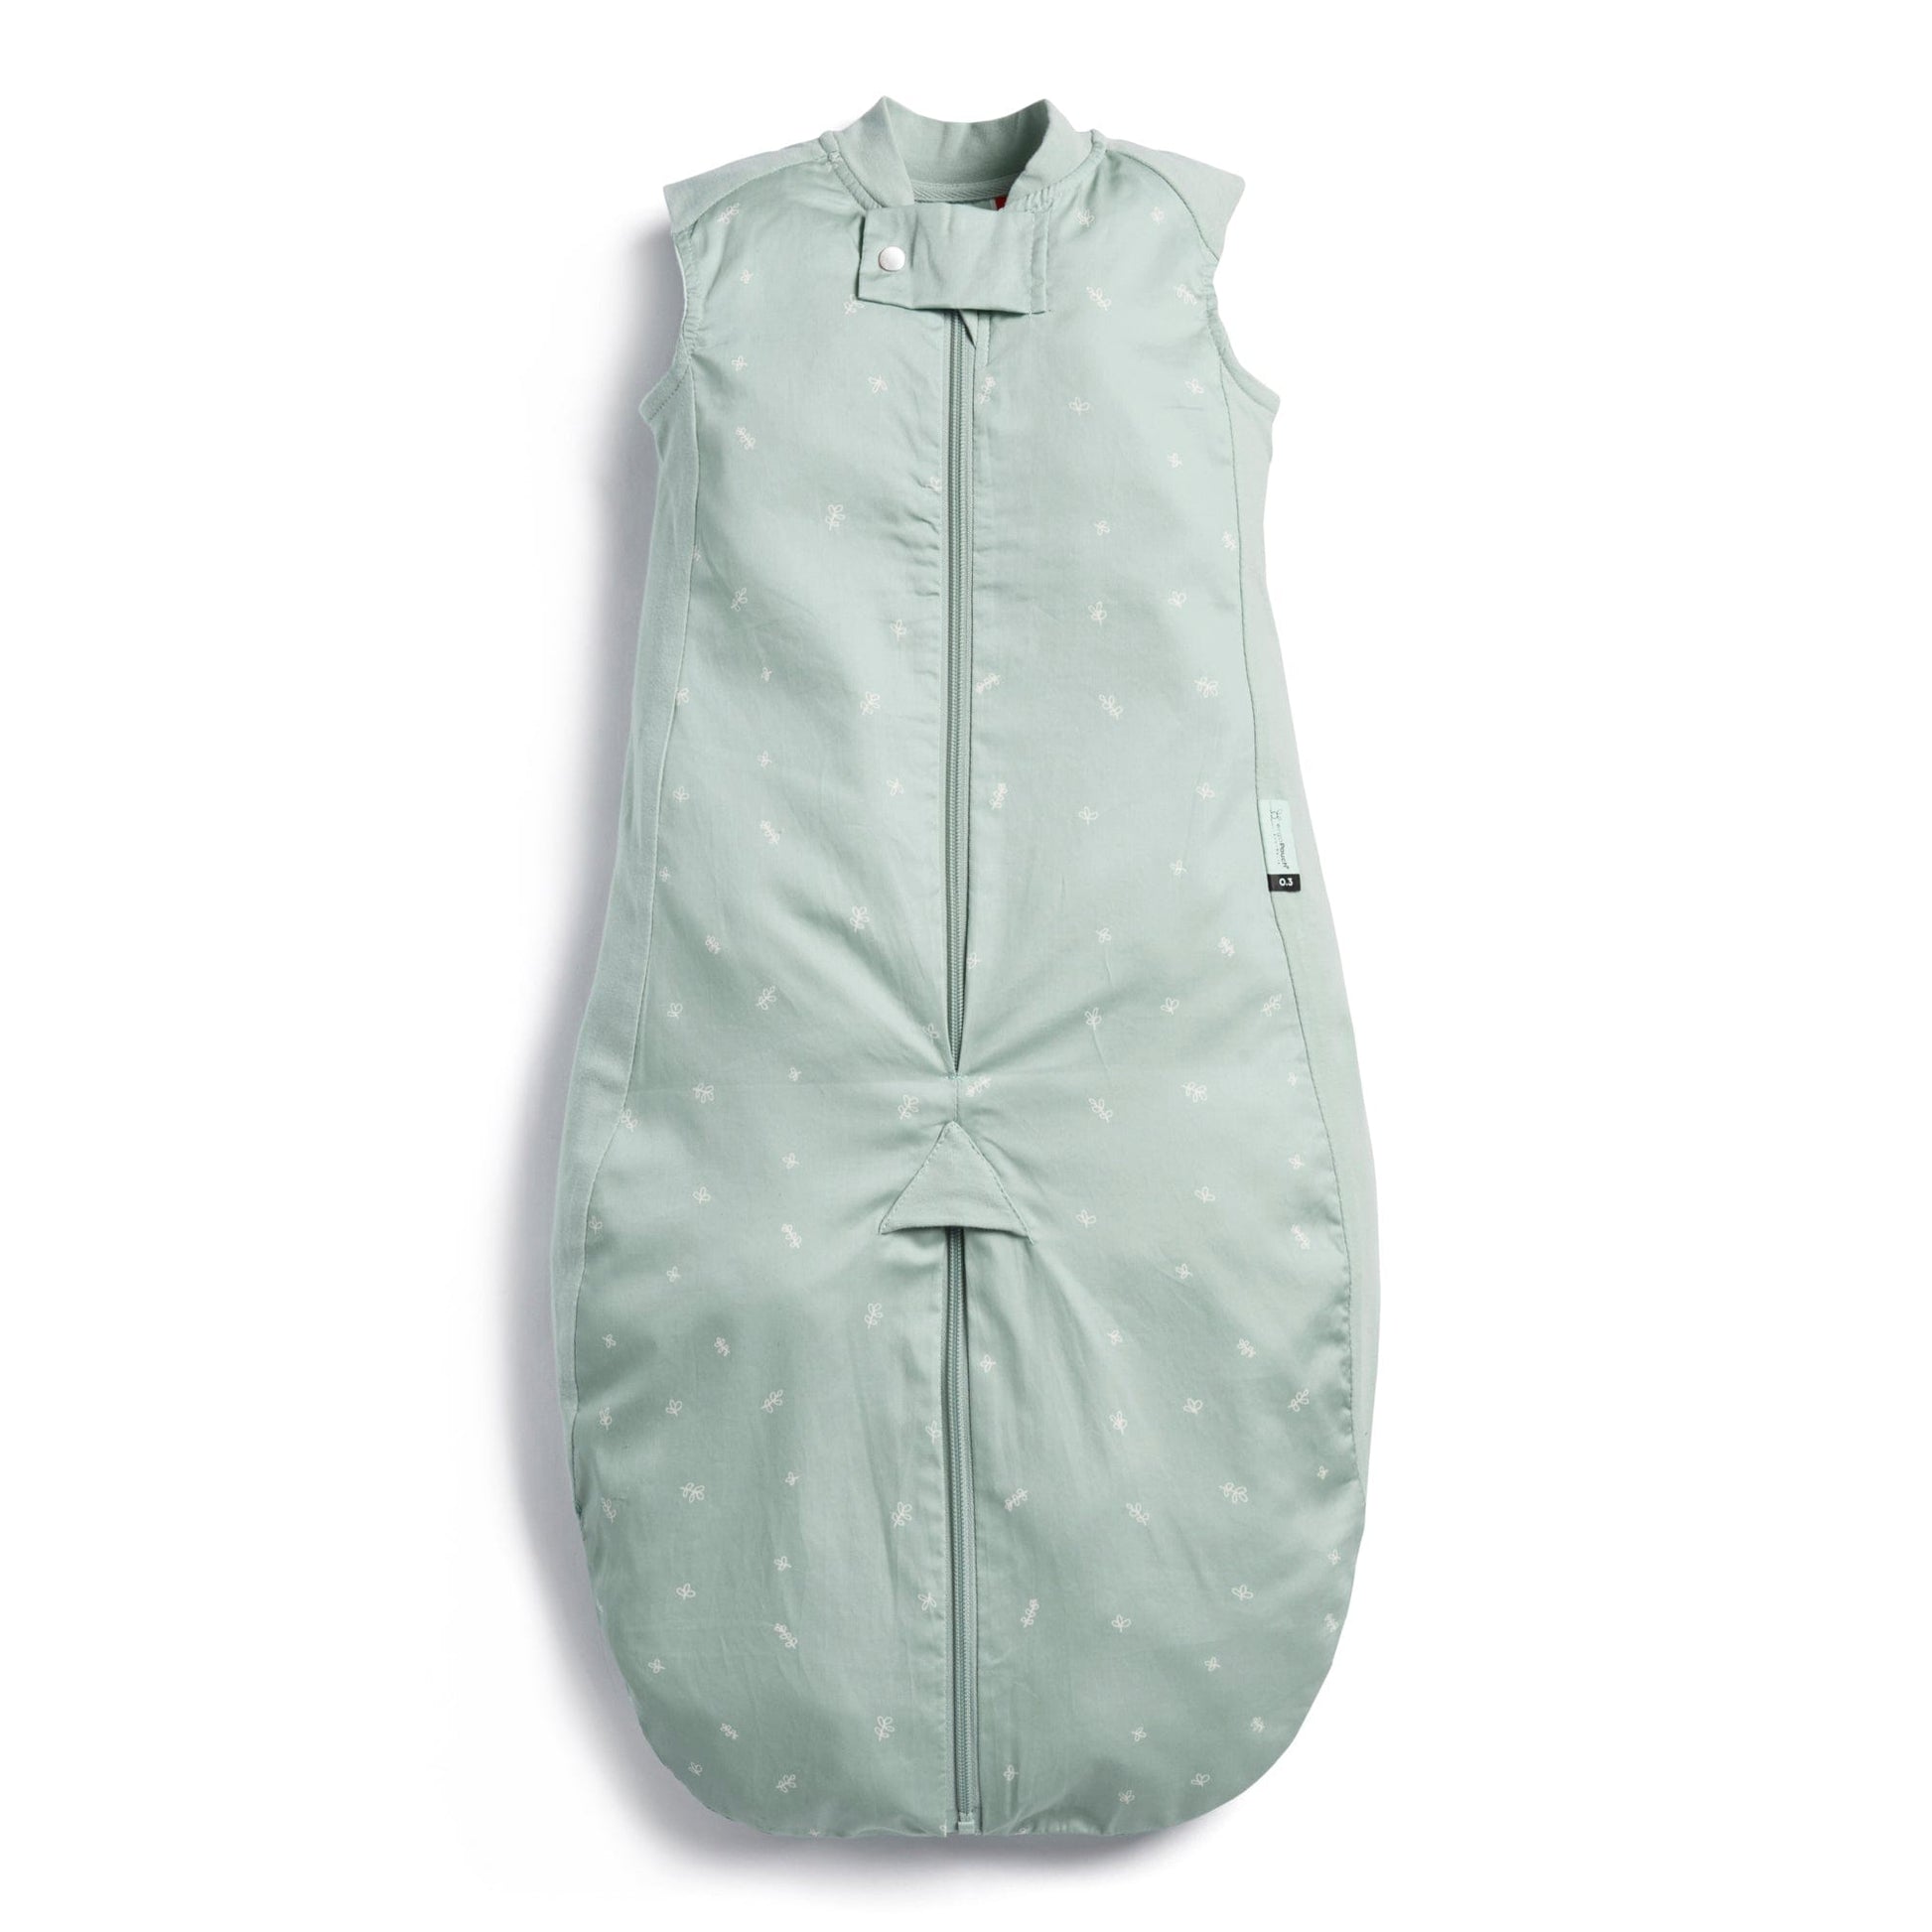 ErgoPouch - Sleep Suit Bag - Sage - 0.3 TOG - Stylemykid.com